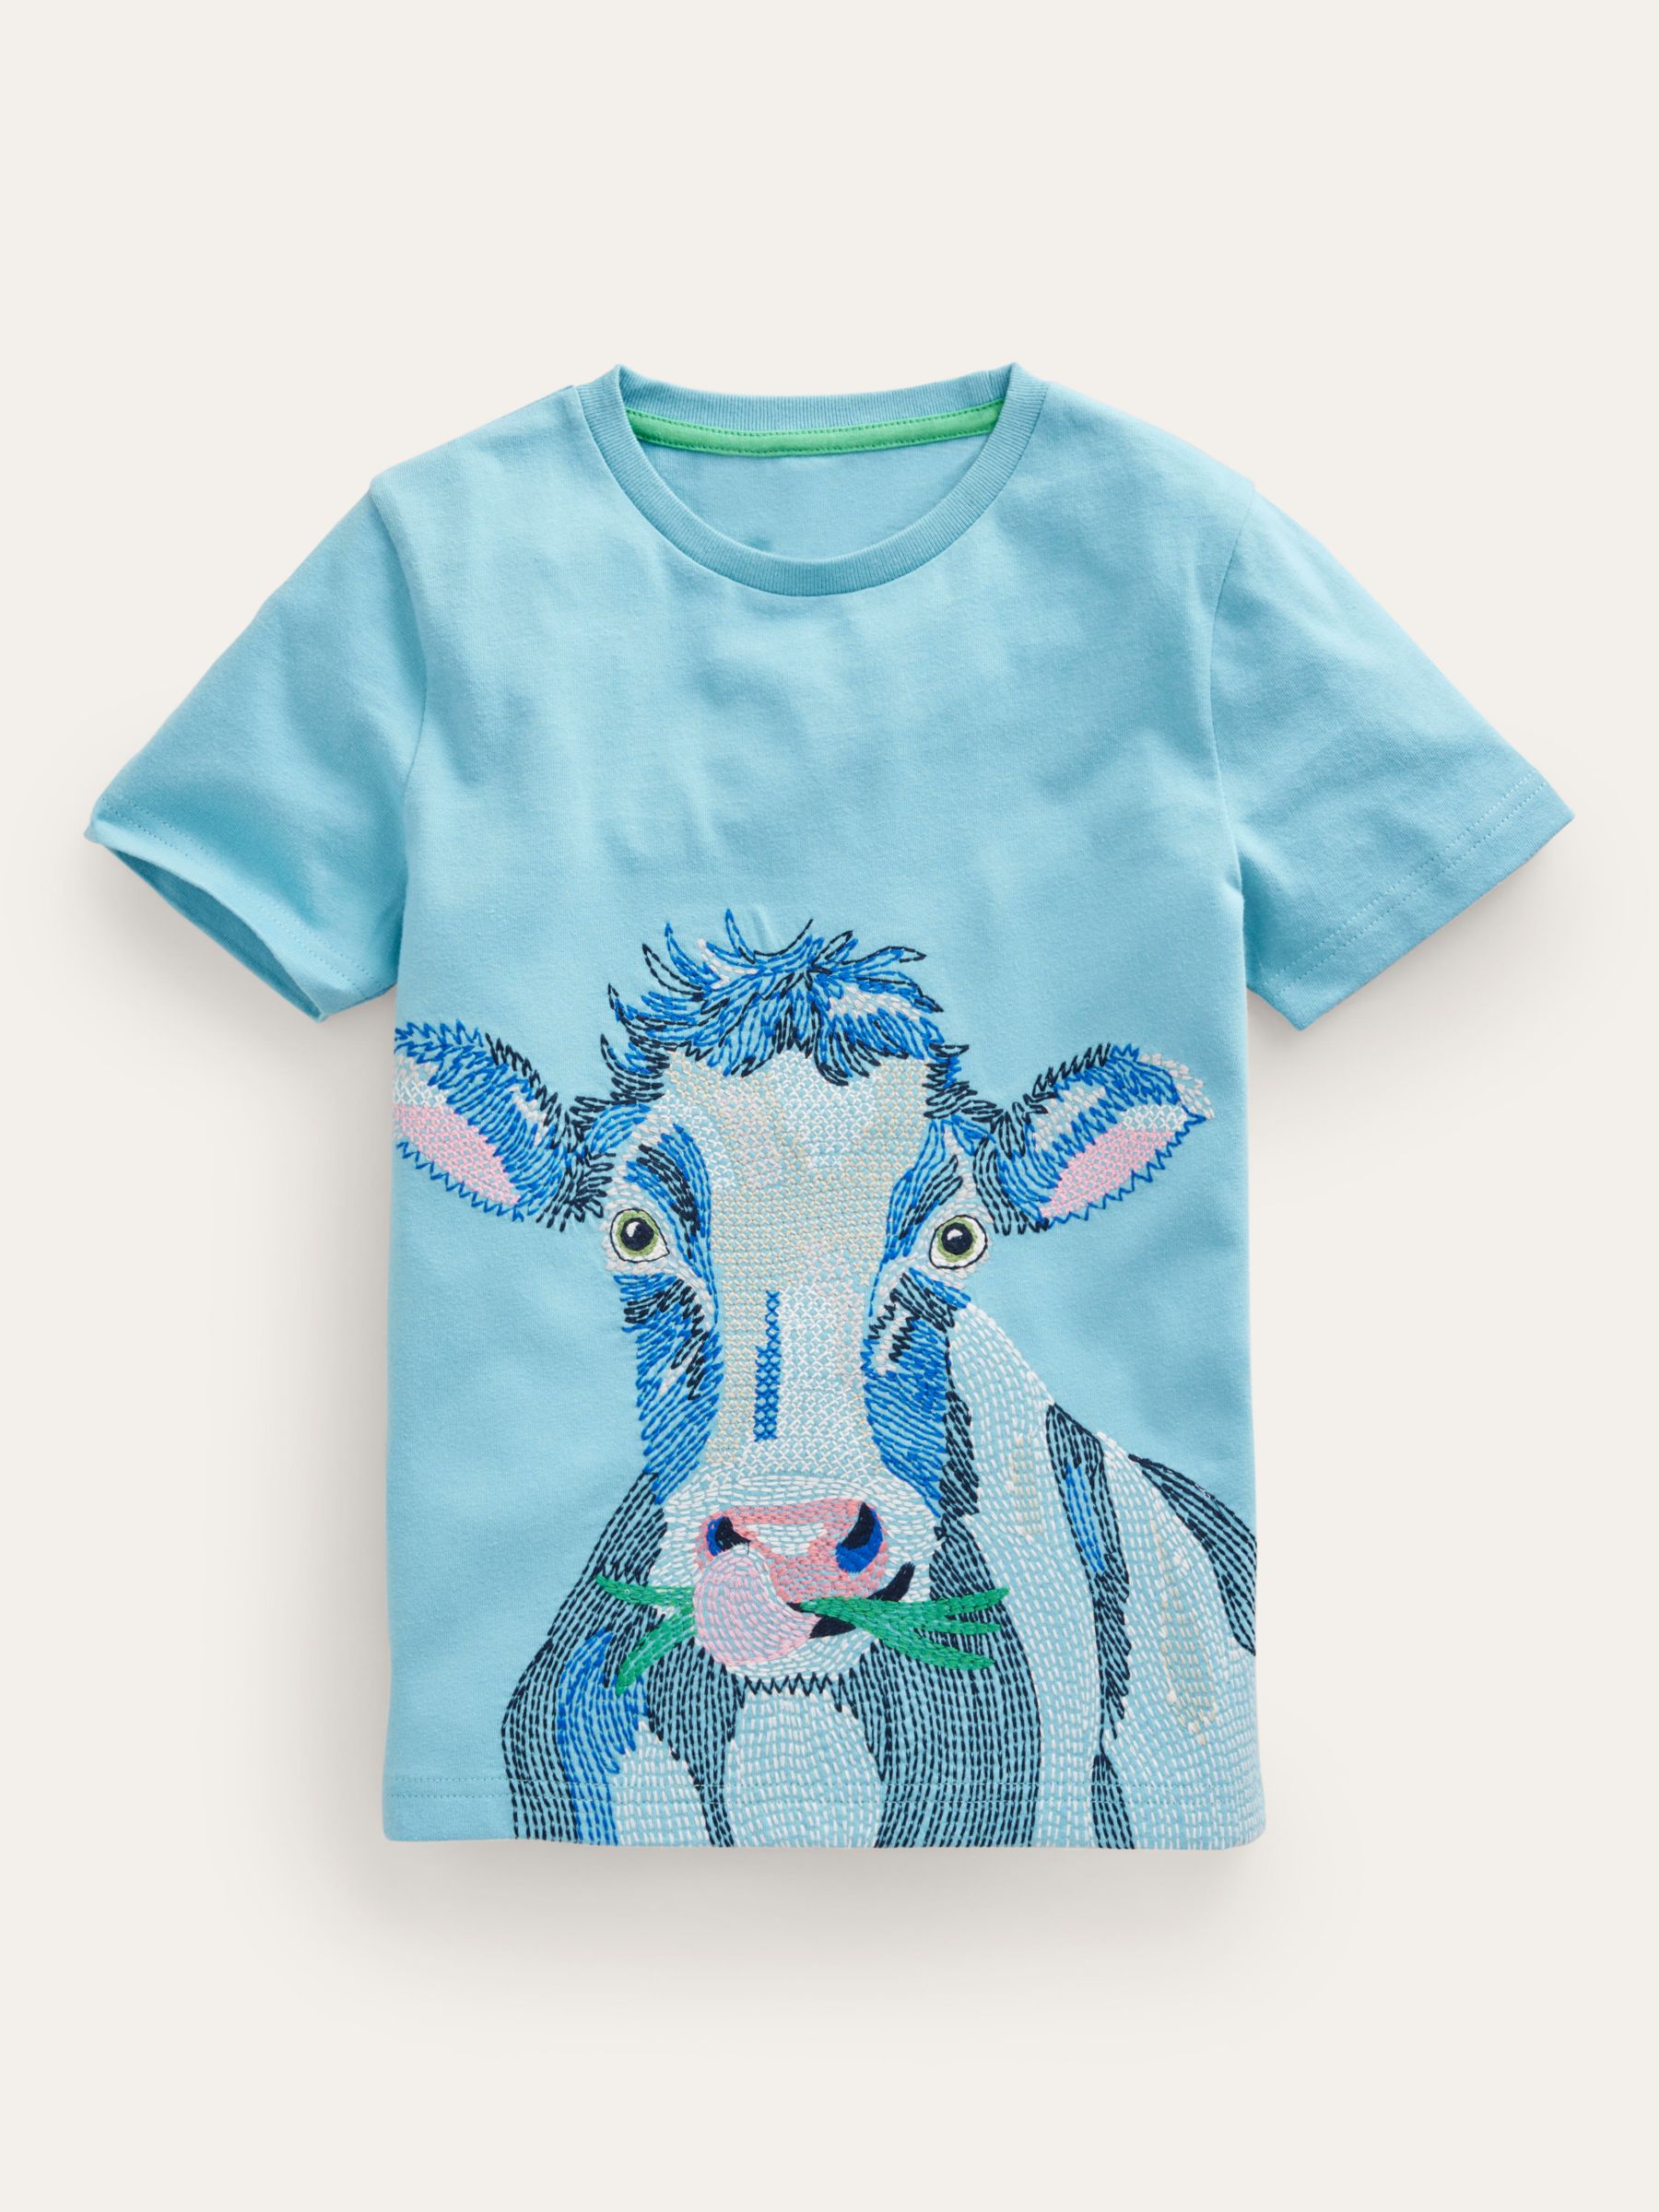 Mini Boden Kids' Superstitch Cow T-Shirt, Dephinium Blue, 2-3 years